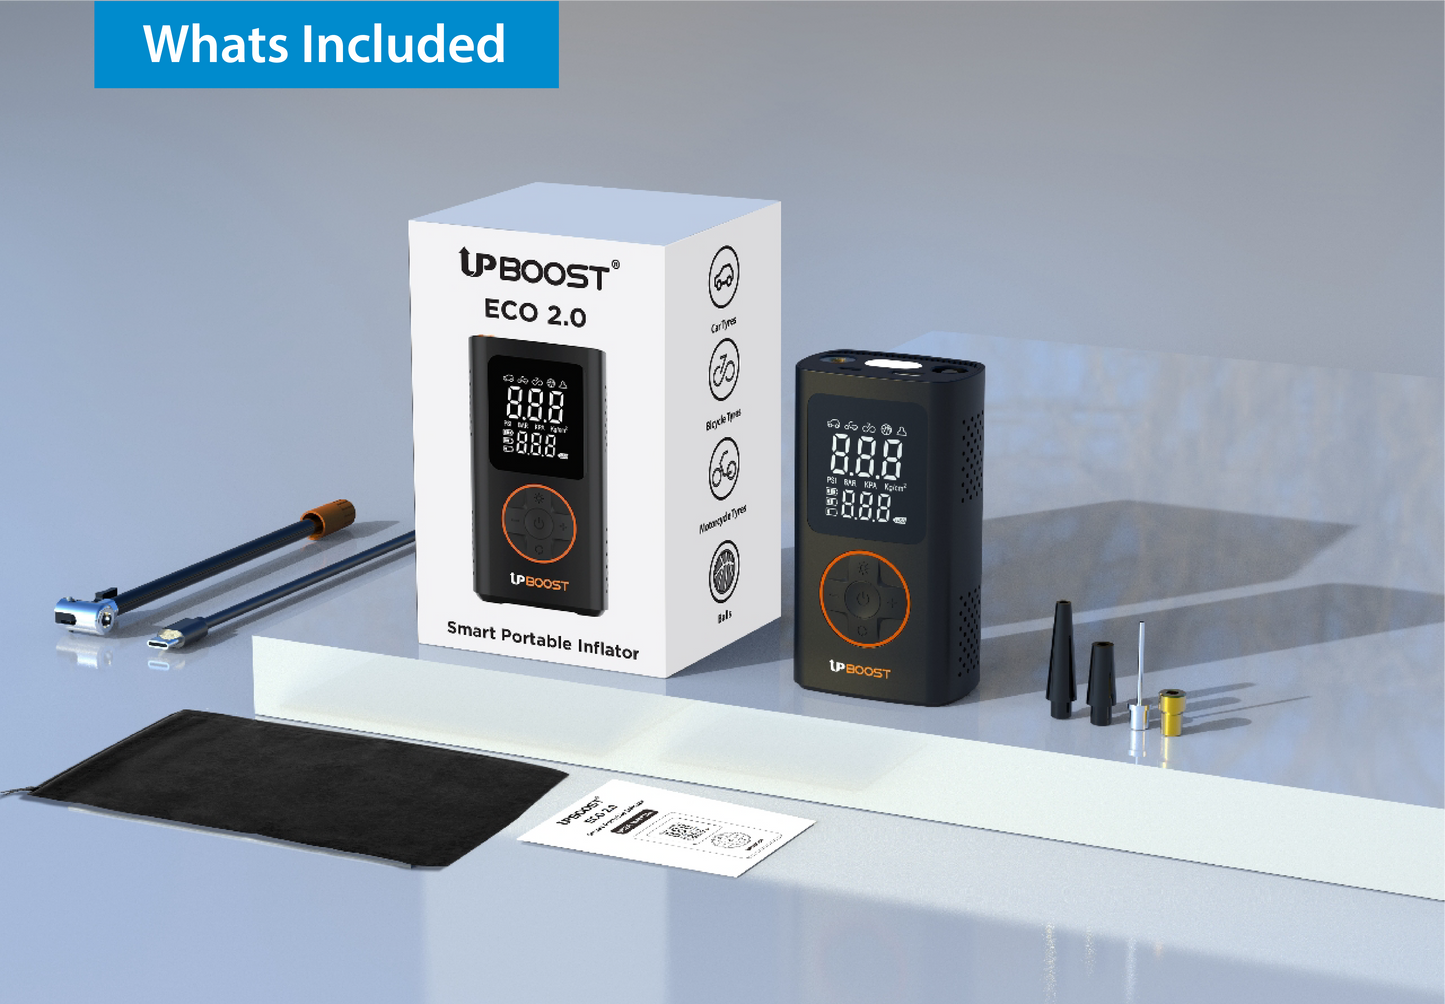 UpBoost Eco 2.0 - Portable Smart Inflator